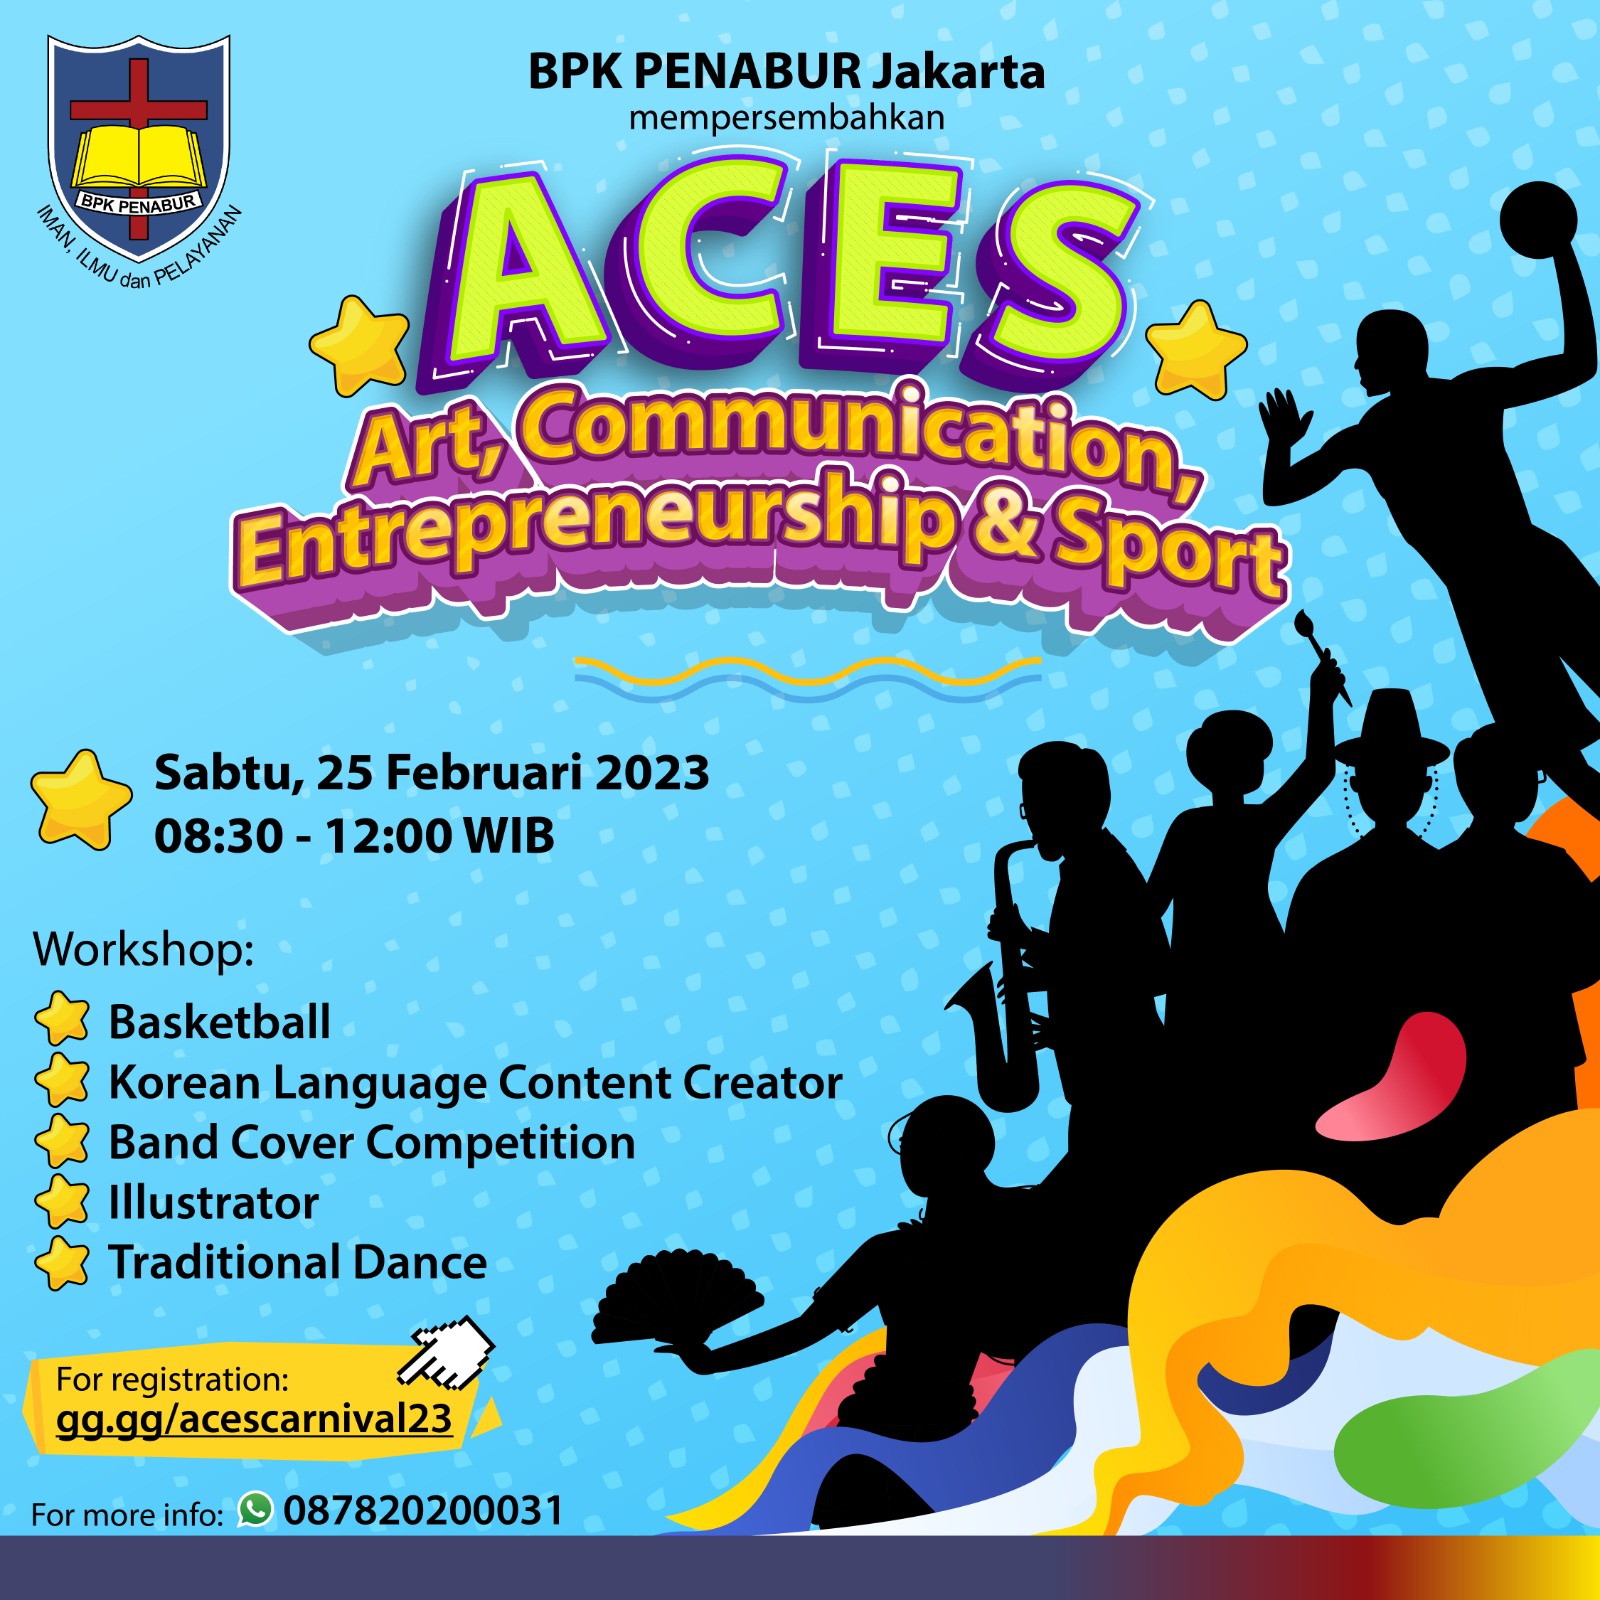 ACES "Art, Communication, Enterpreneurship, & Sport"